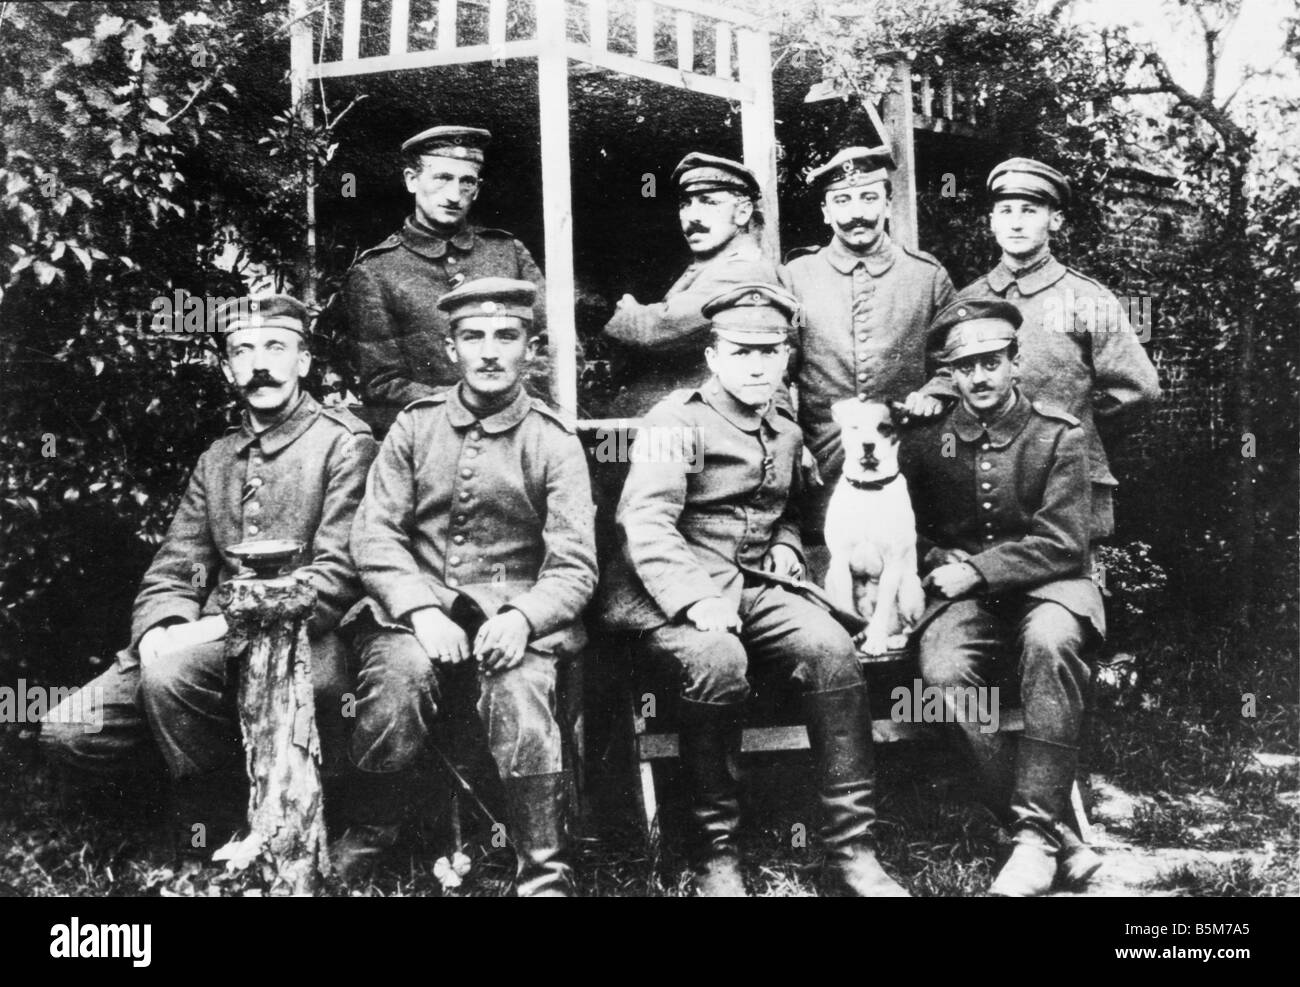 1 H76 F1916 1 e Hitler con compagni soldati c 1916 Adolf Hitler dittatore NSDAP Braunau 20 4 1889 Berlin suicidio 30 4 1945 Hitler Foto Stock